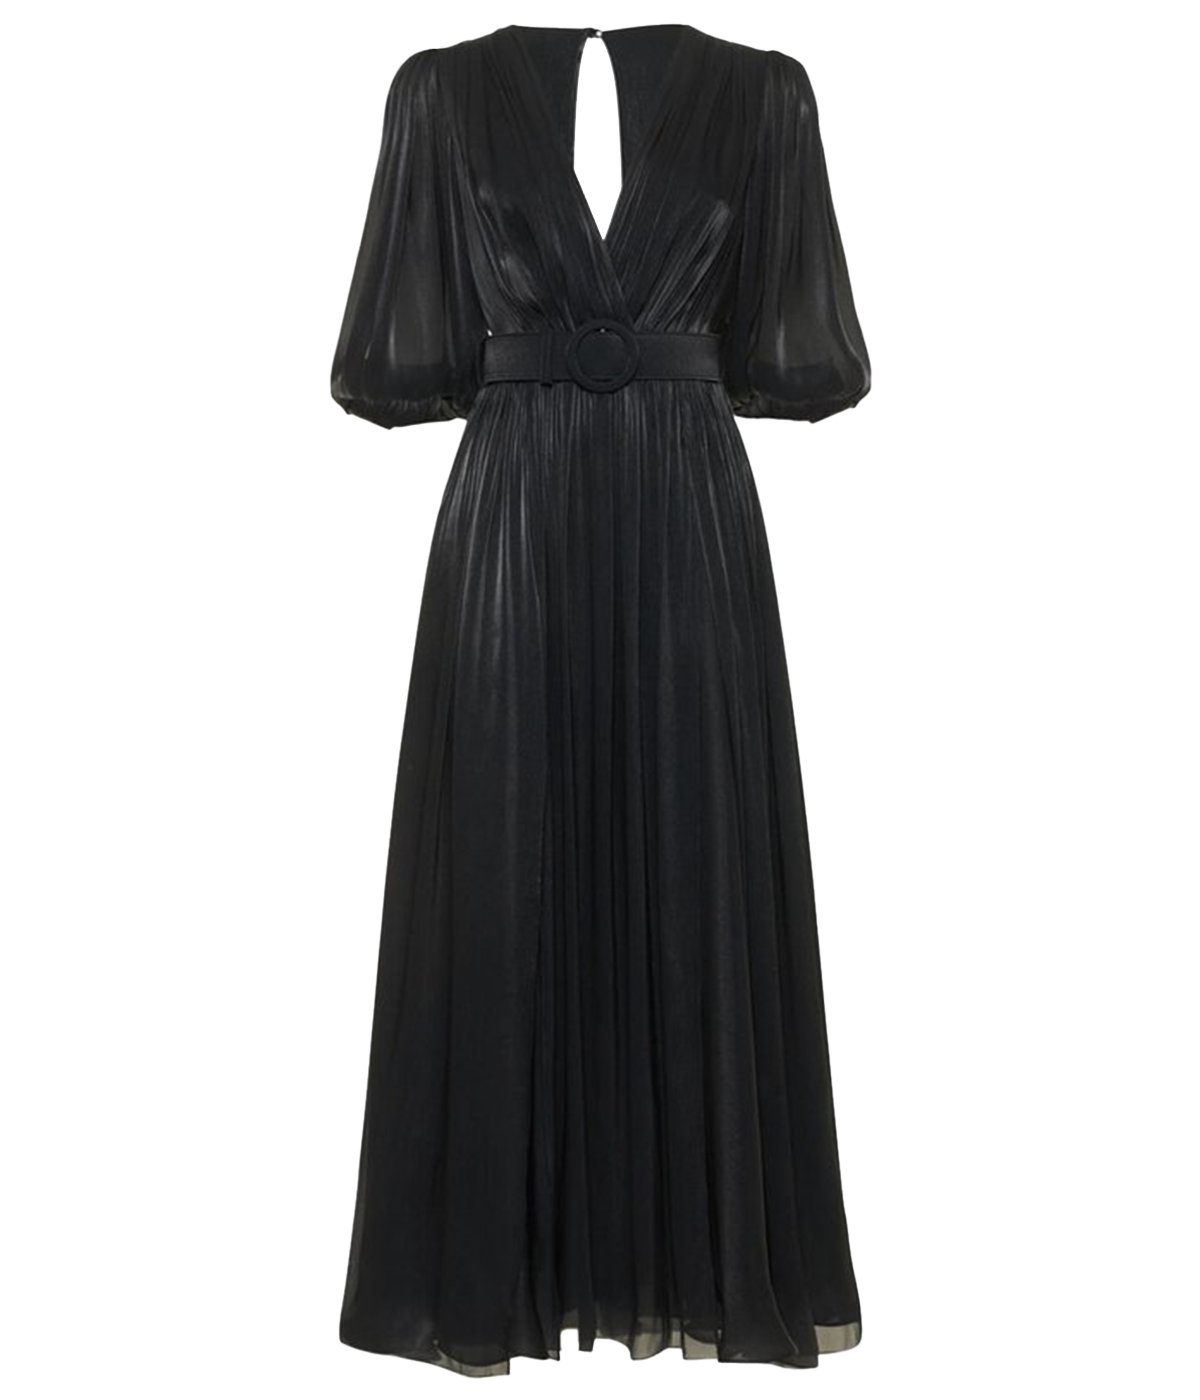 Brennie Dress in Black